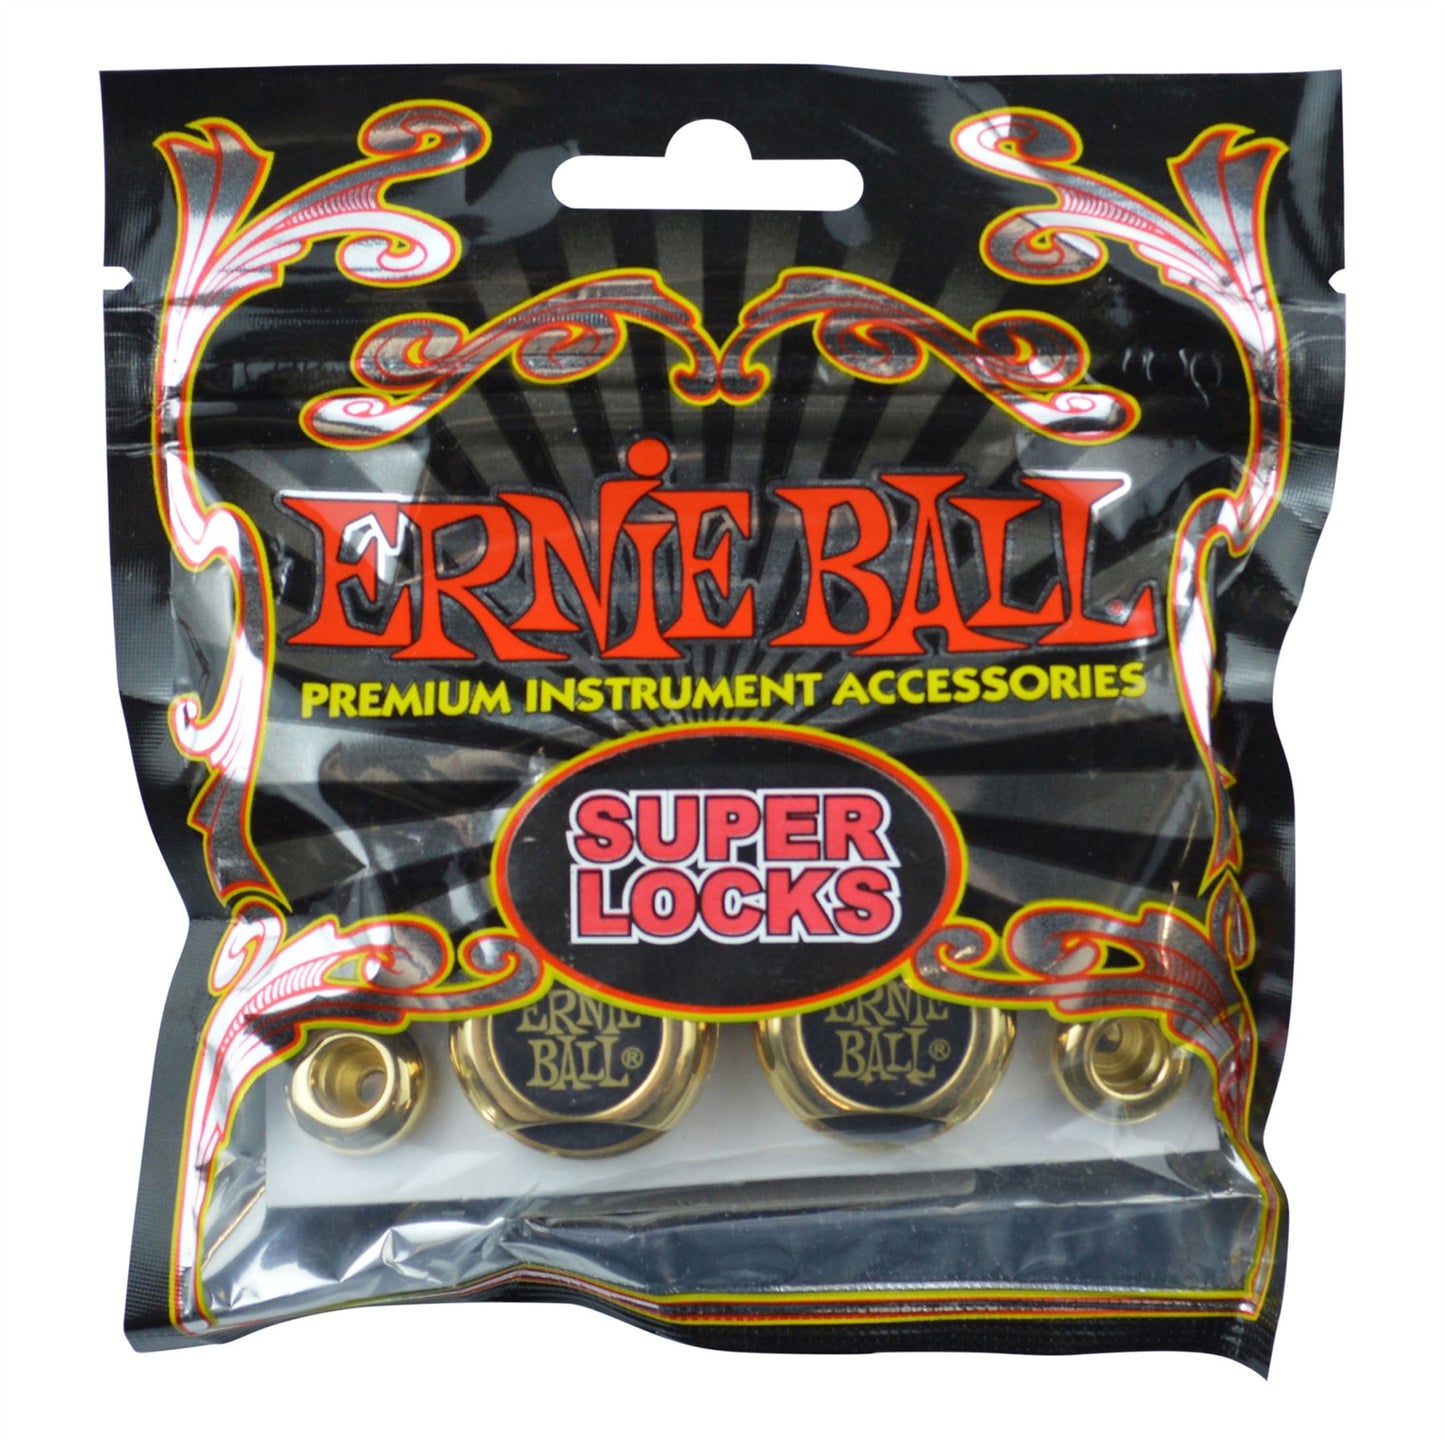 Ernie Ball Guitar Straplocks - Gold